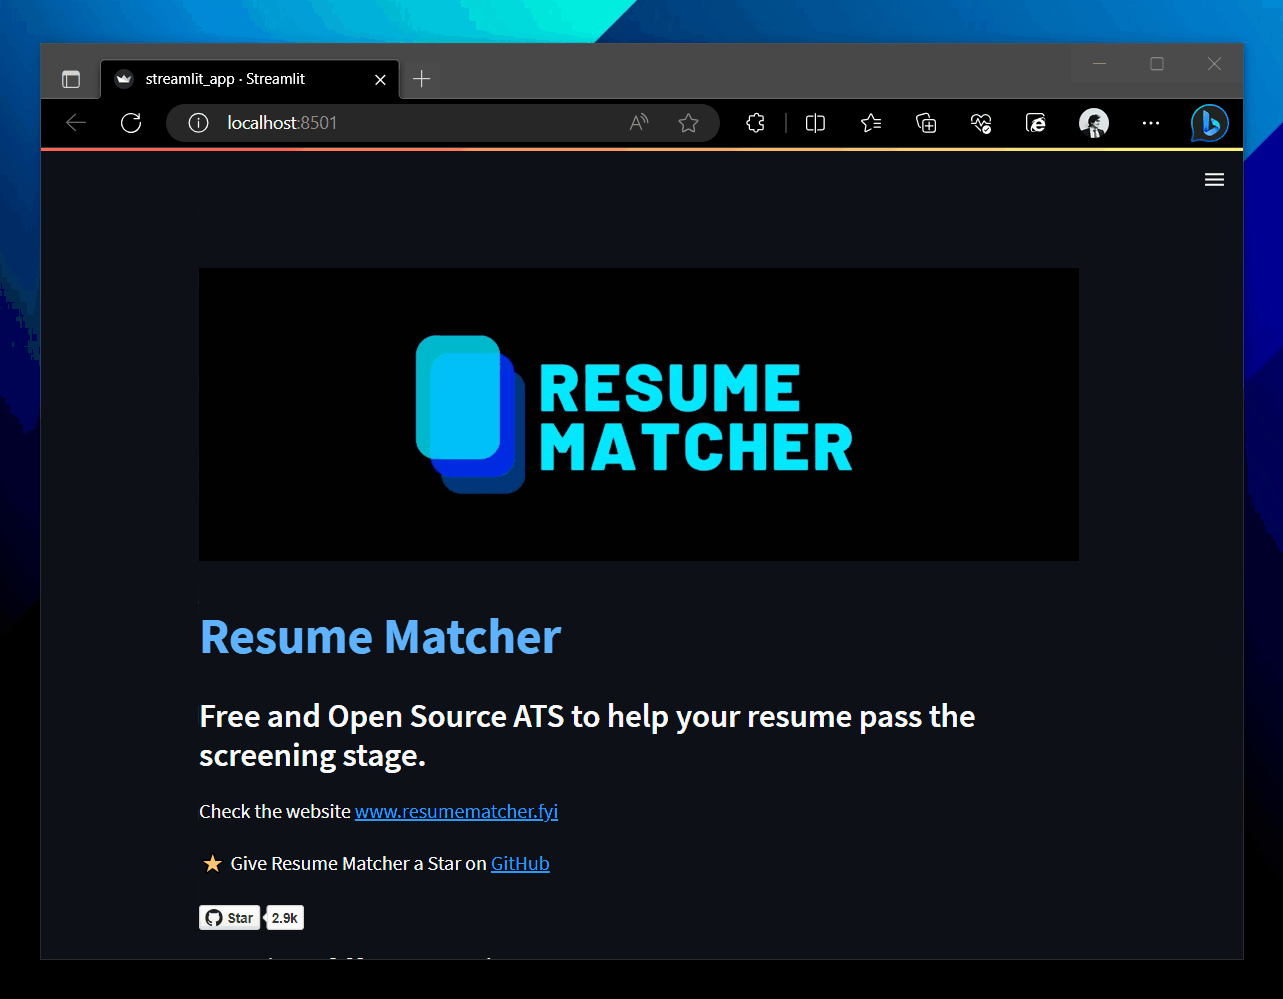 Resume_Matcher_Gif.gif